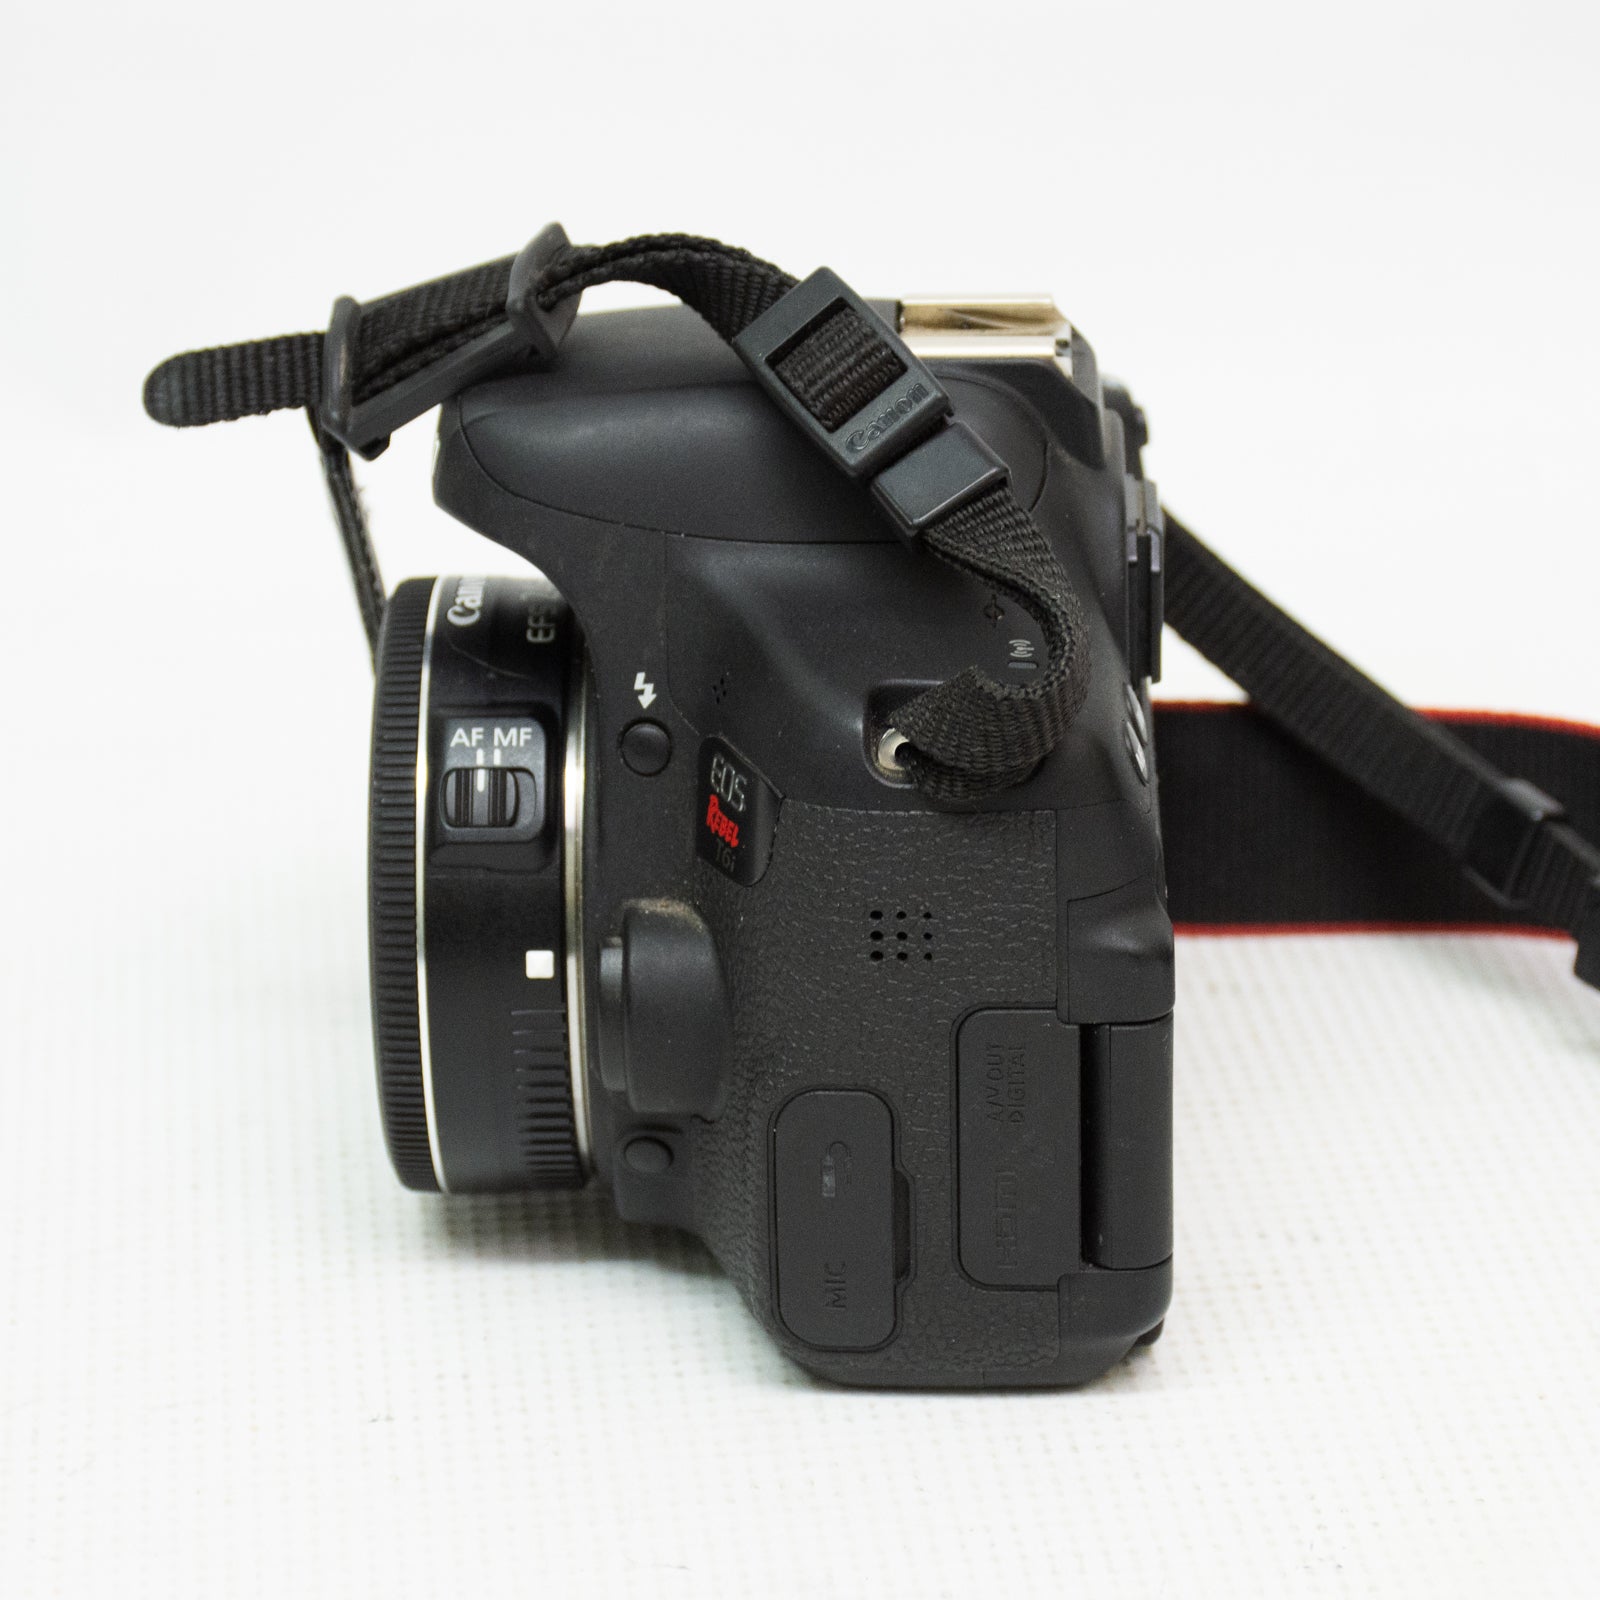 Canon EOS Rebel T6i Camera Bundle